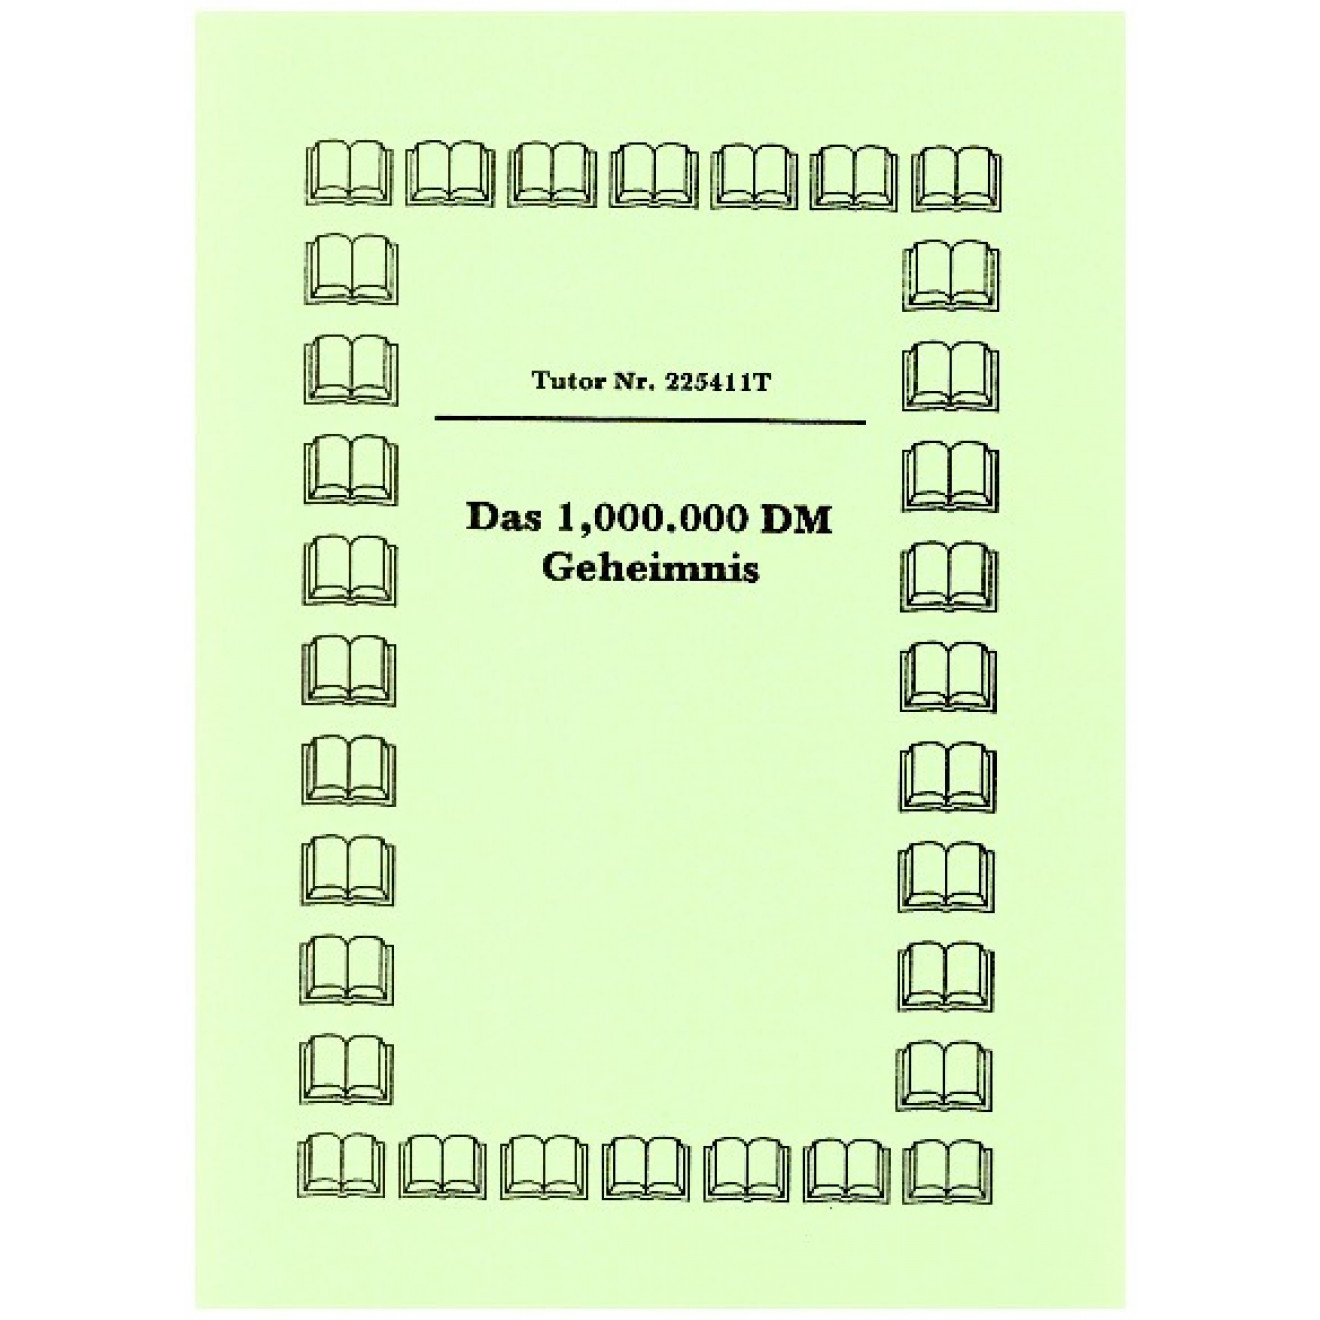 Das 1,000.000 DM Geheimnis